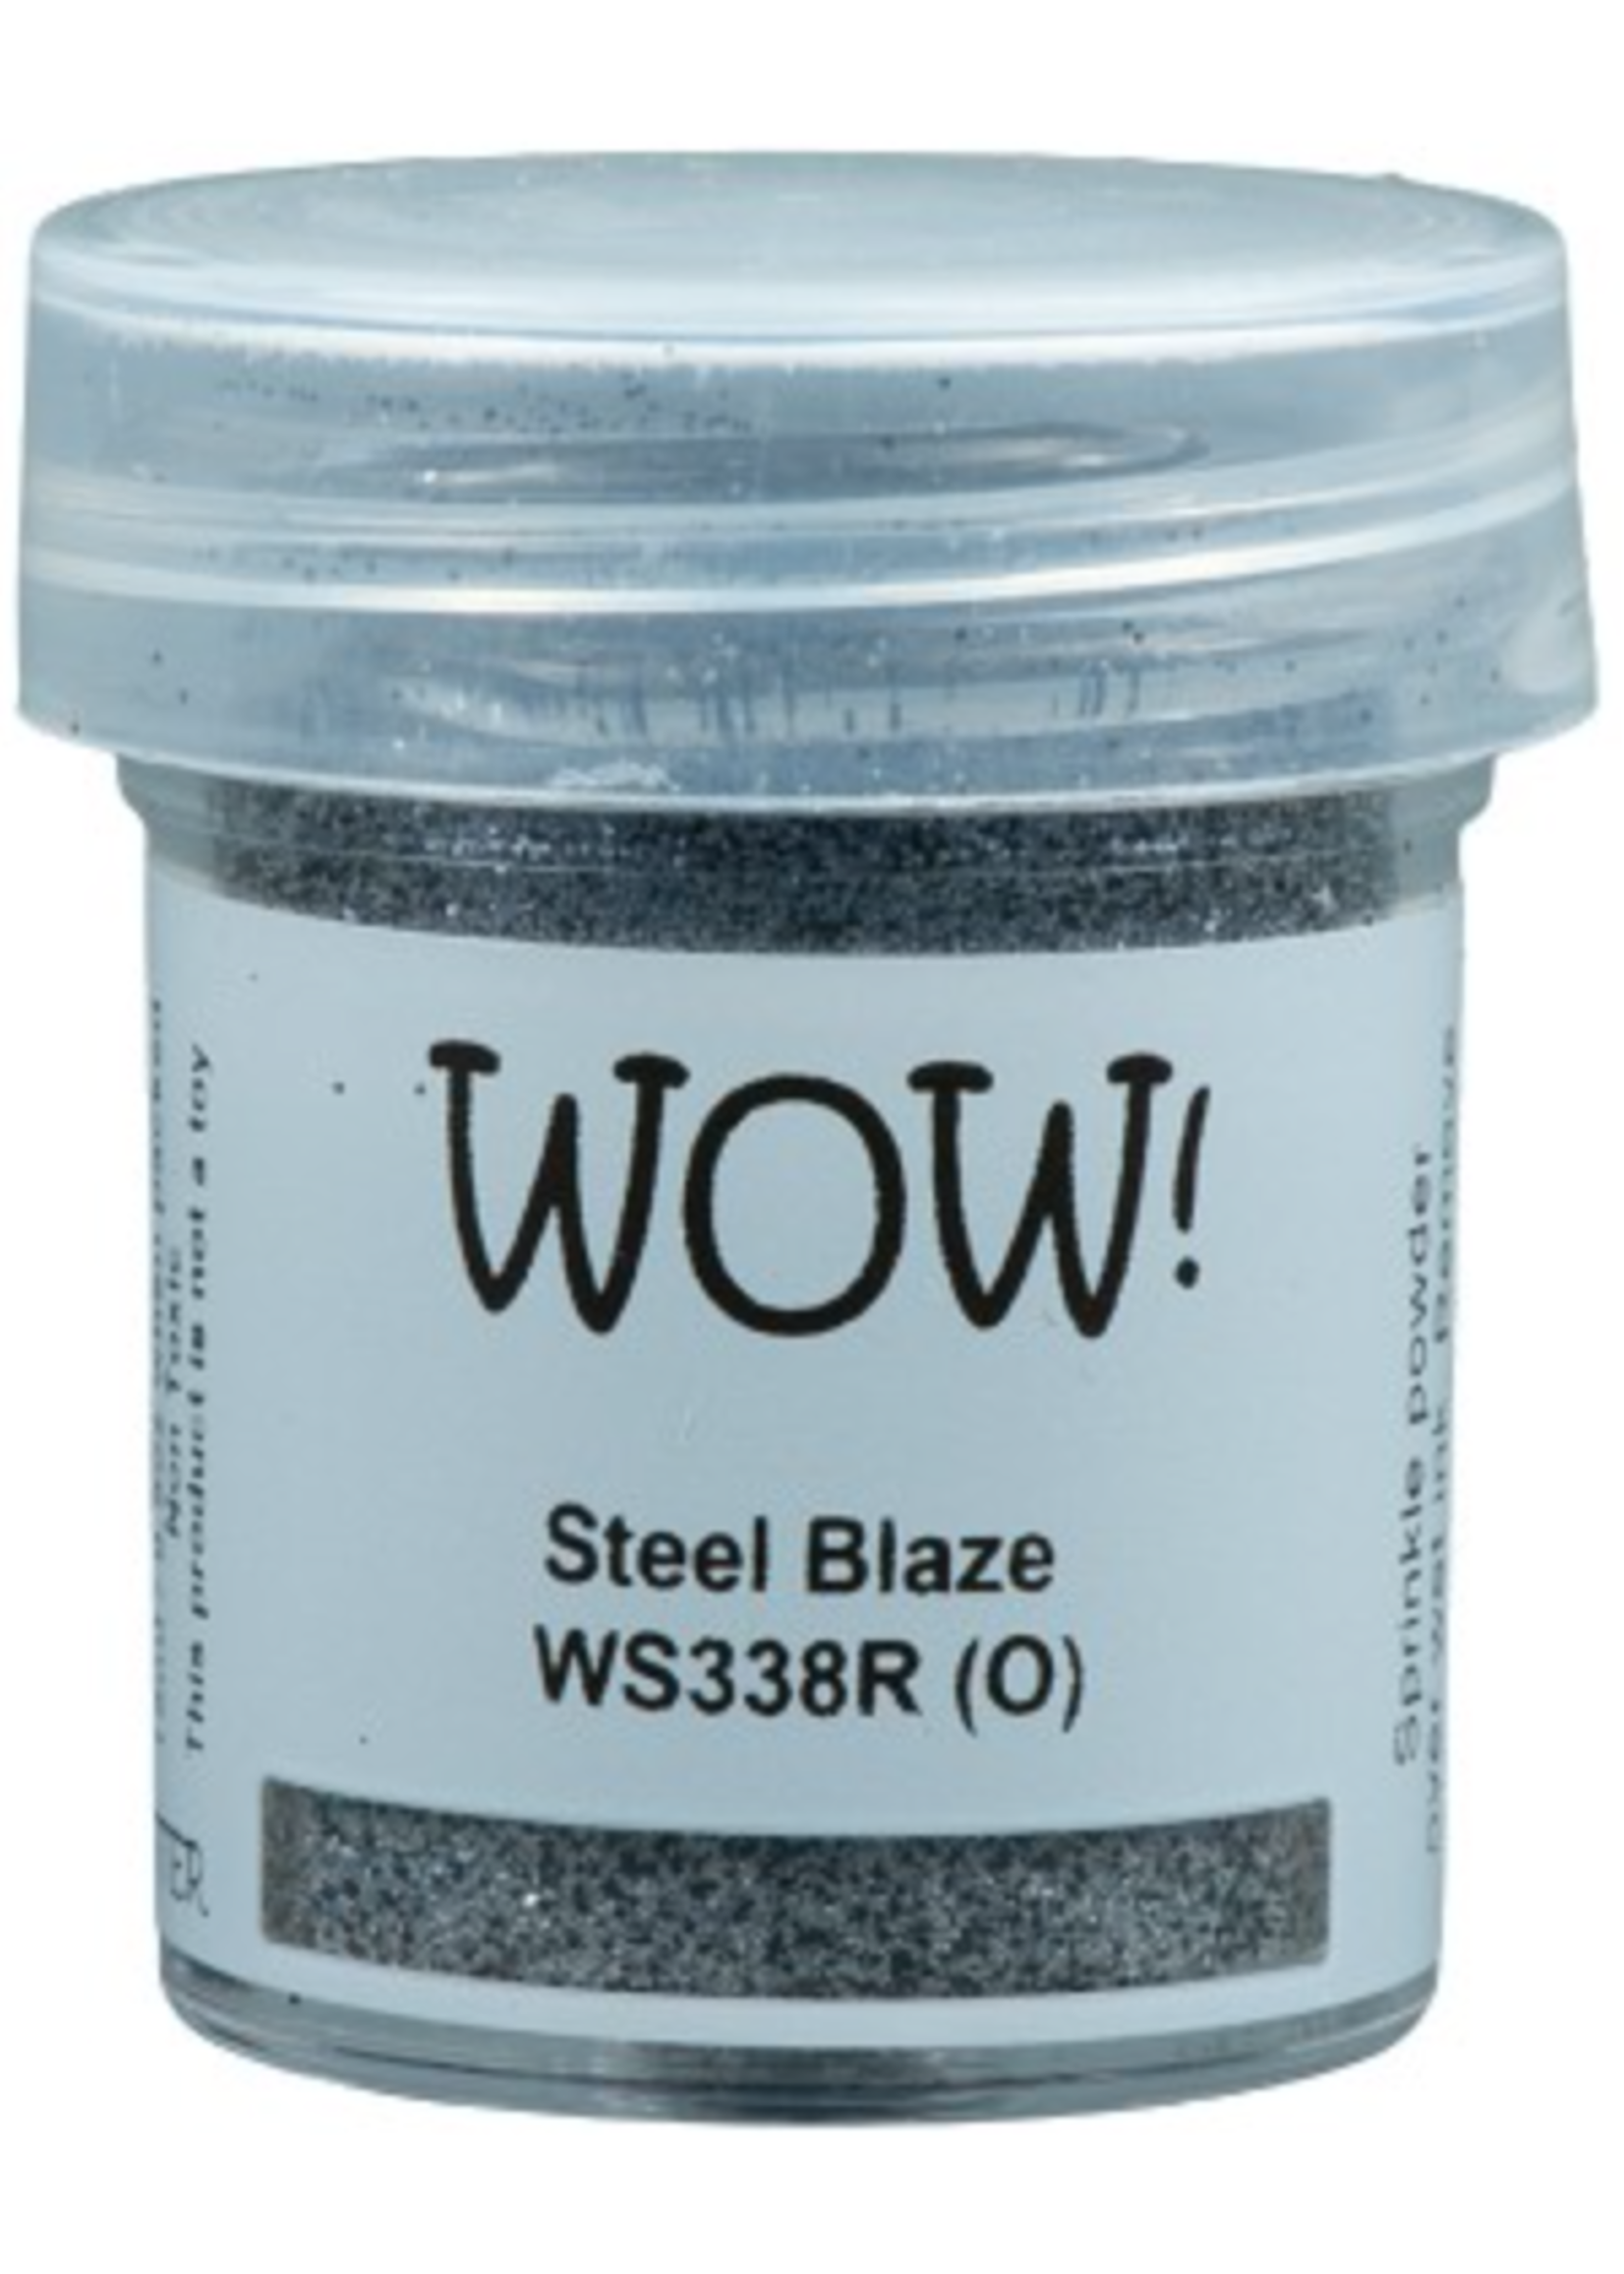 wow! WOW! Steel Blaze